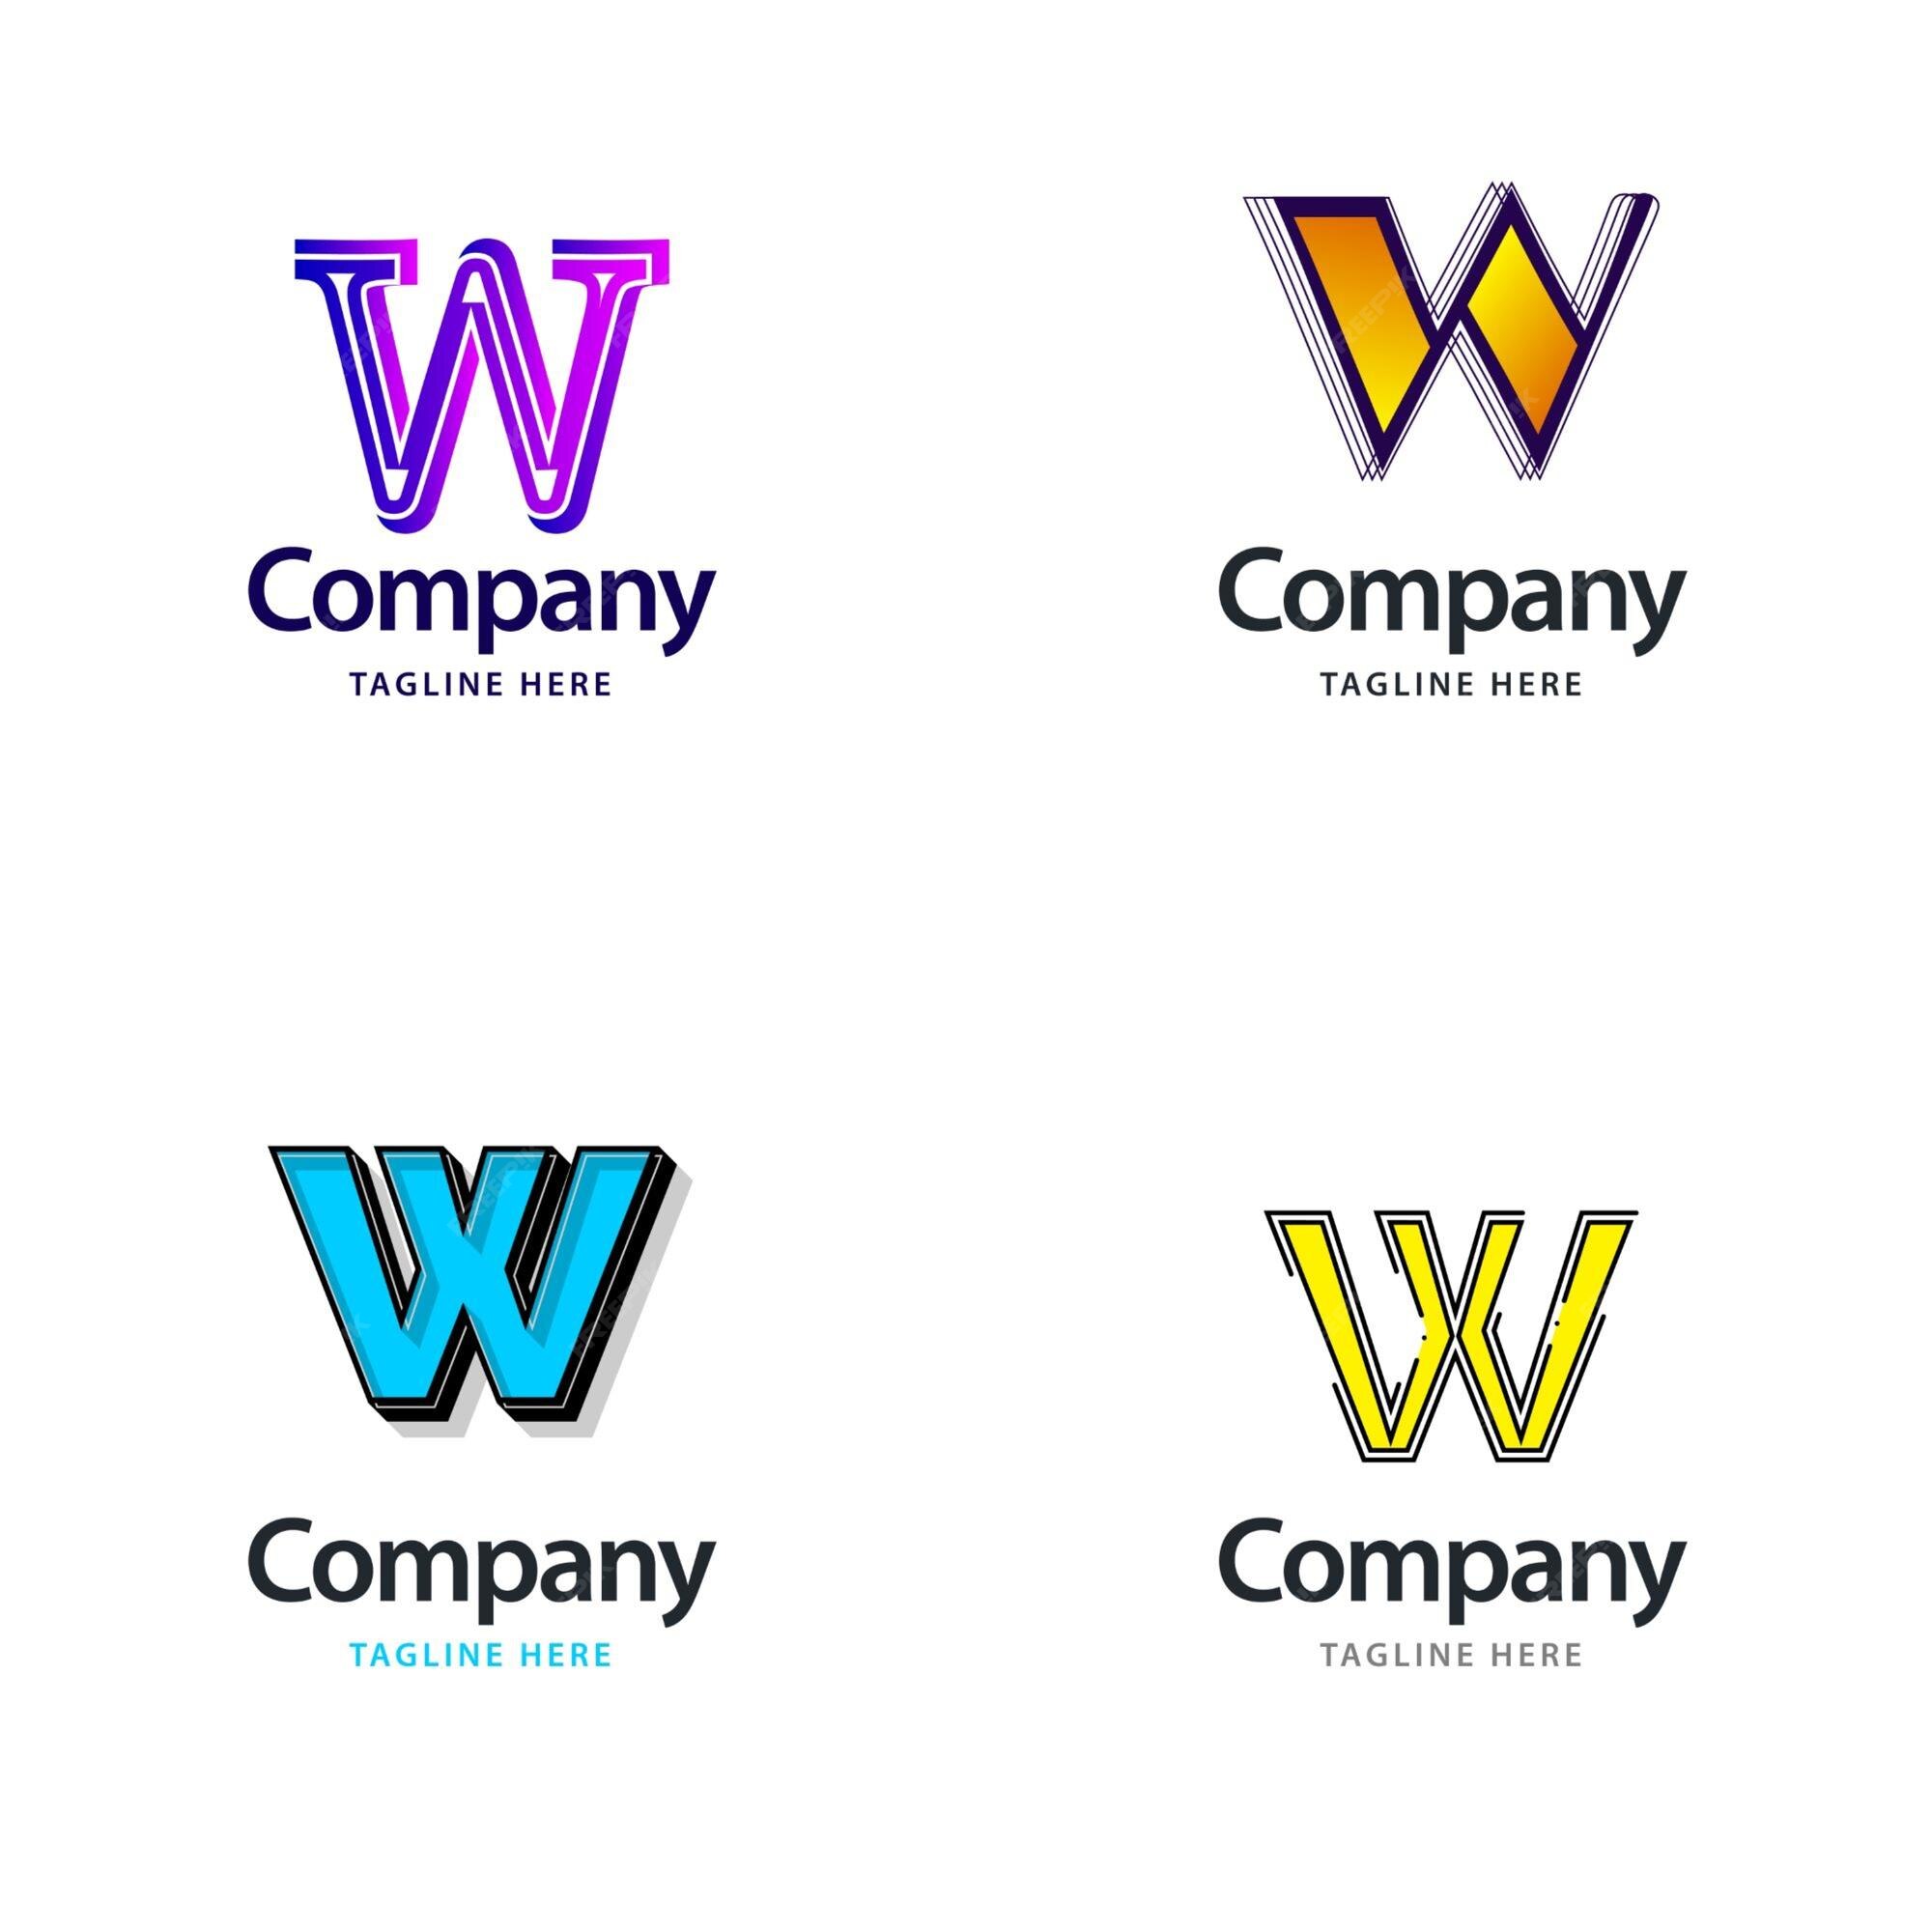 W company logo  Corporate logo design, Company logo, ? logo